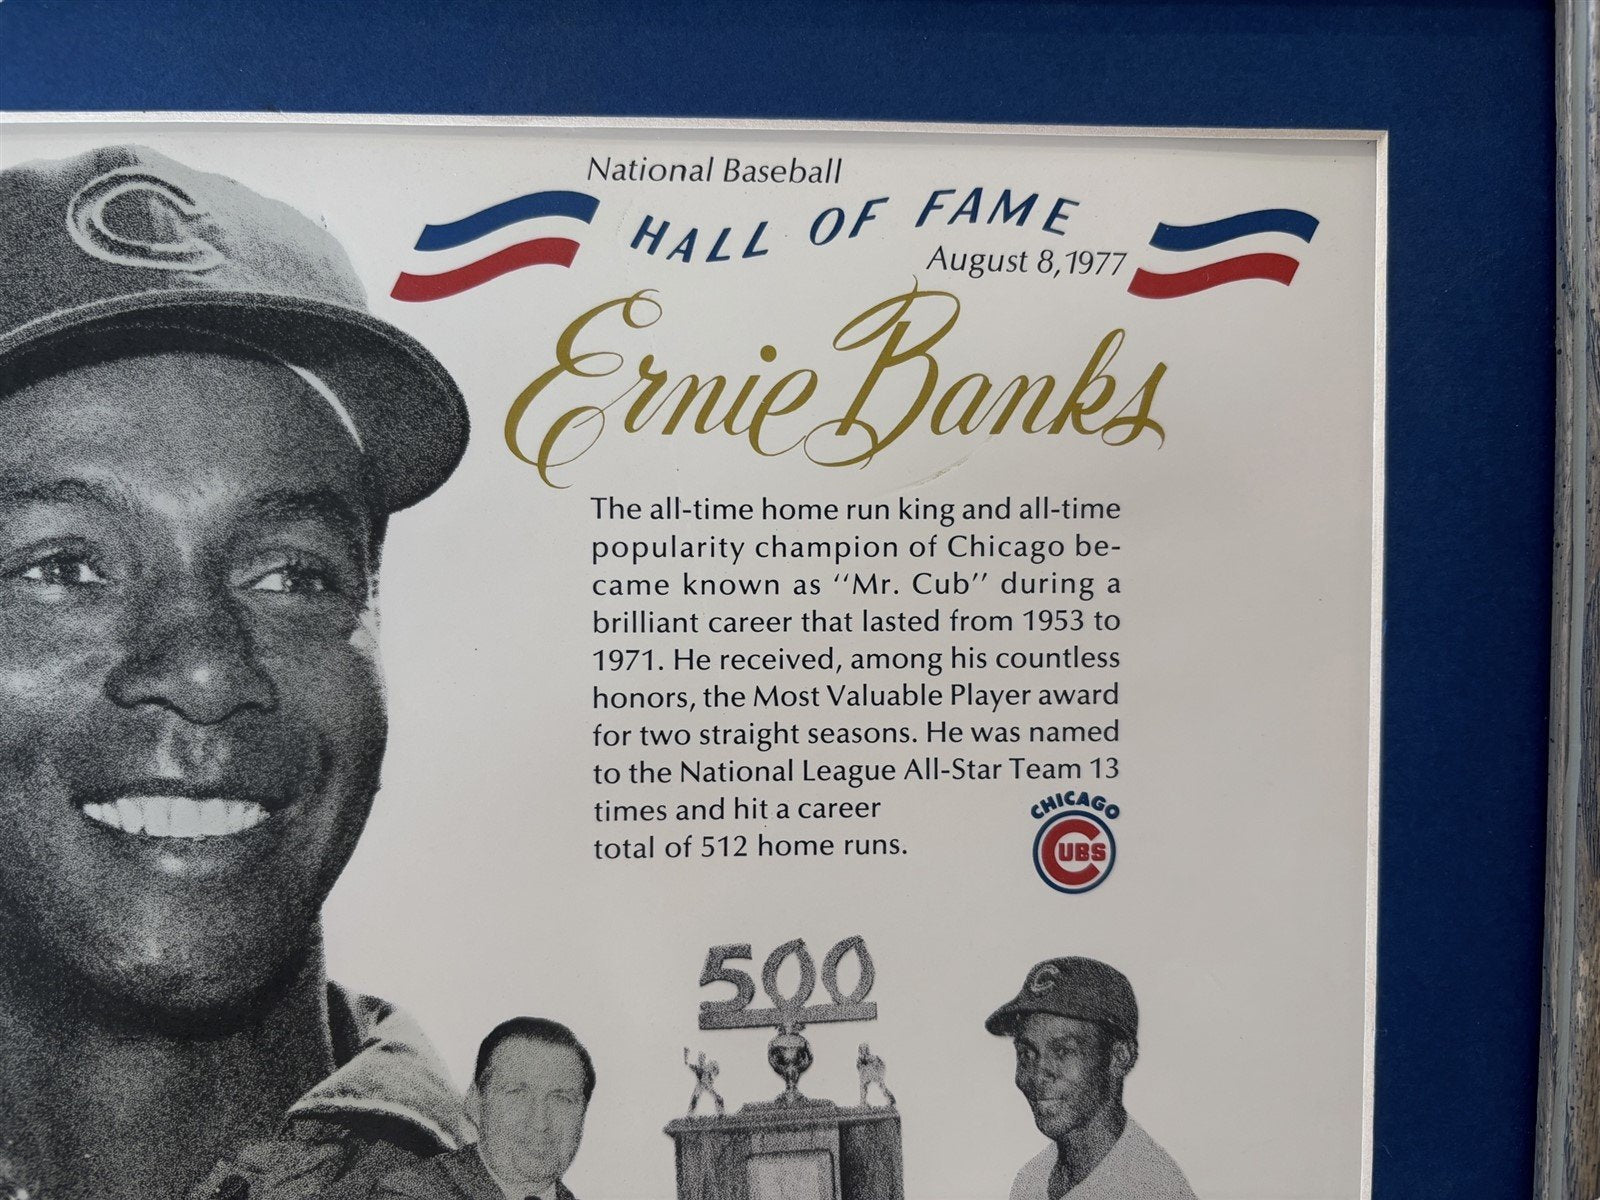 Ernie Banks Hall of Fame National Baseball August 8, 1977 Chicago Cubs